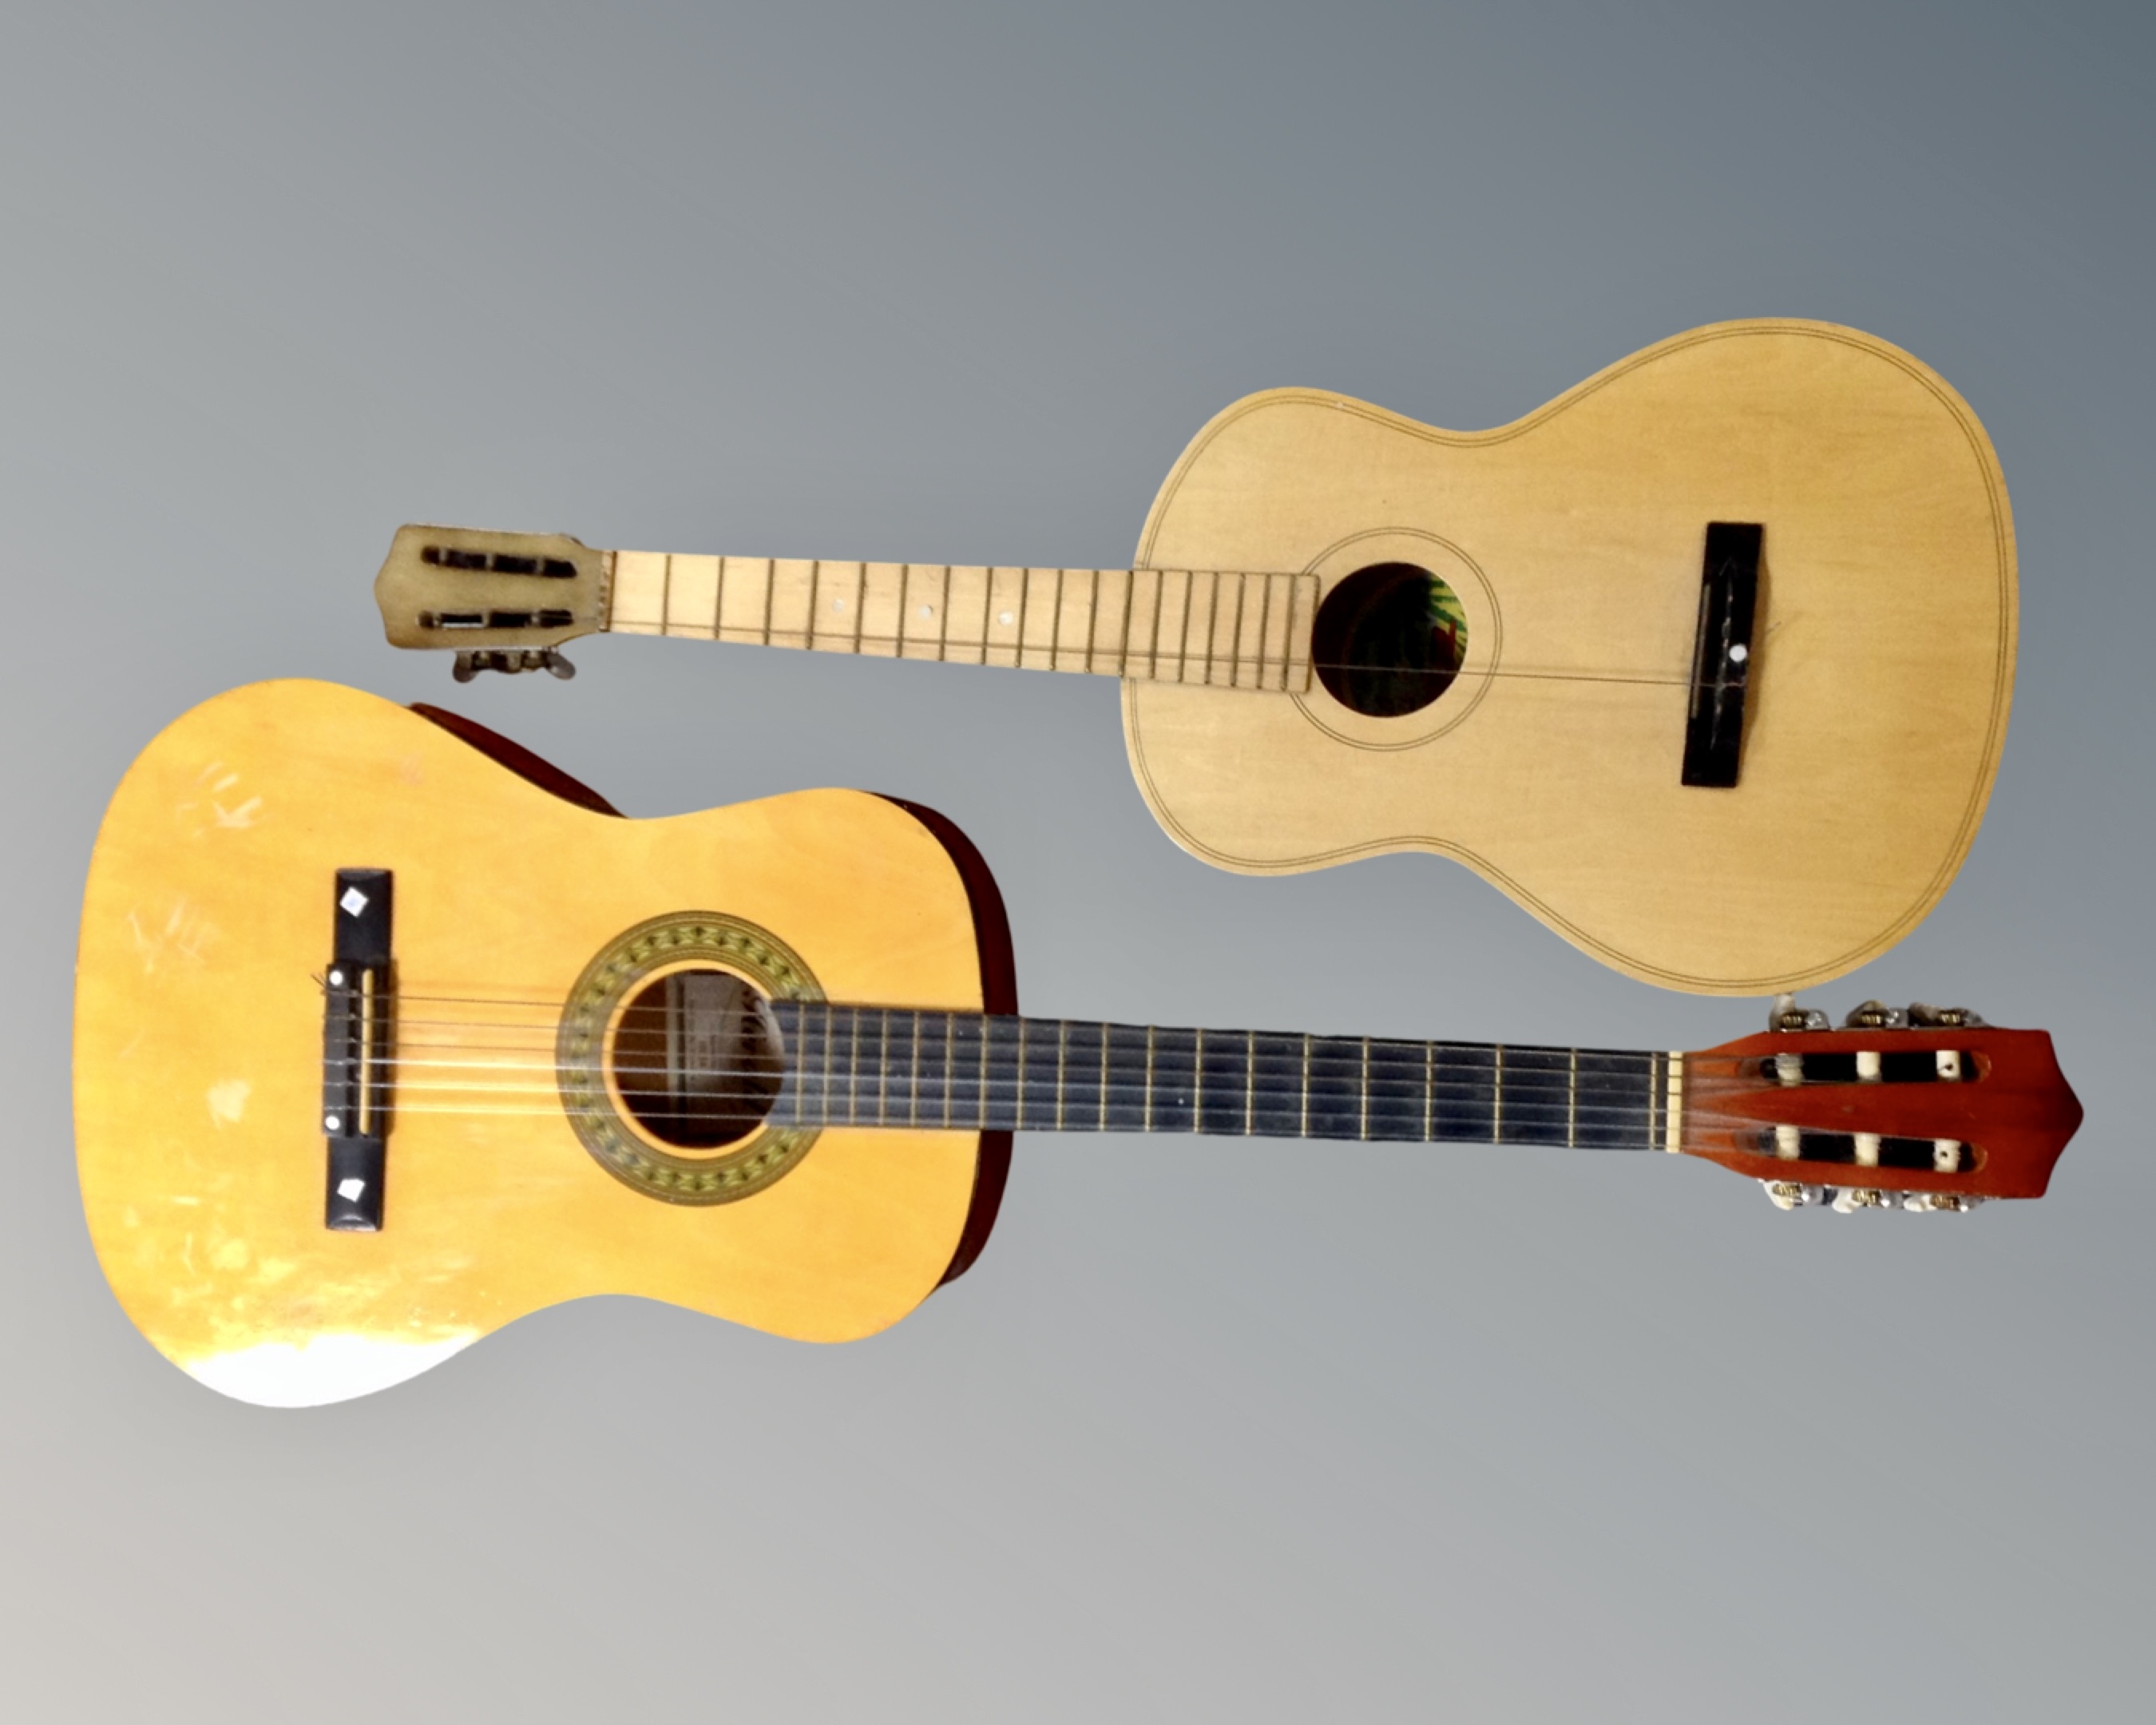 A Herald model number HL34 acoustic guitar and a further Lark Junior guitar